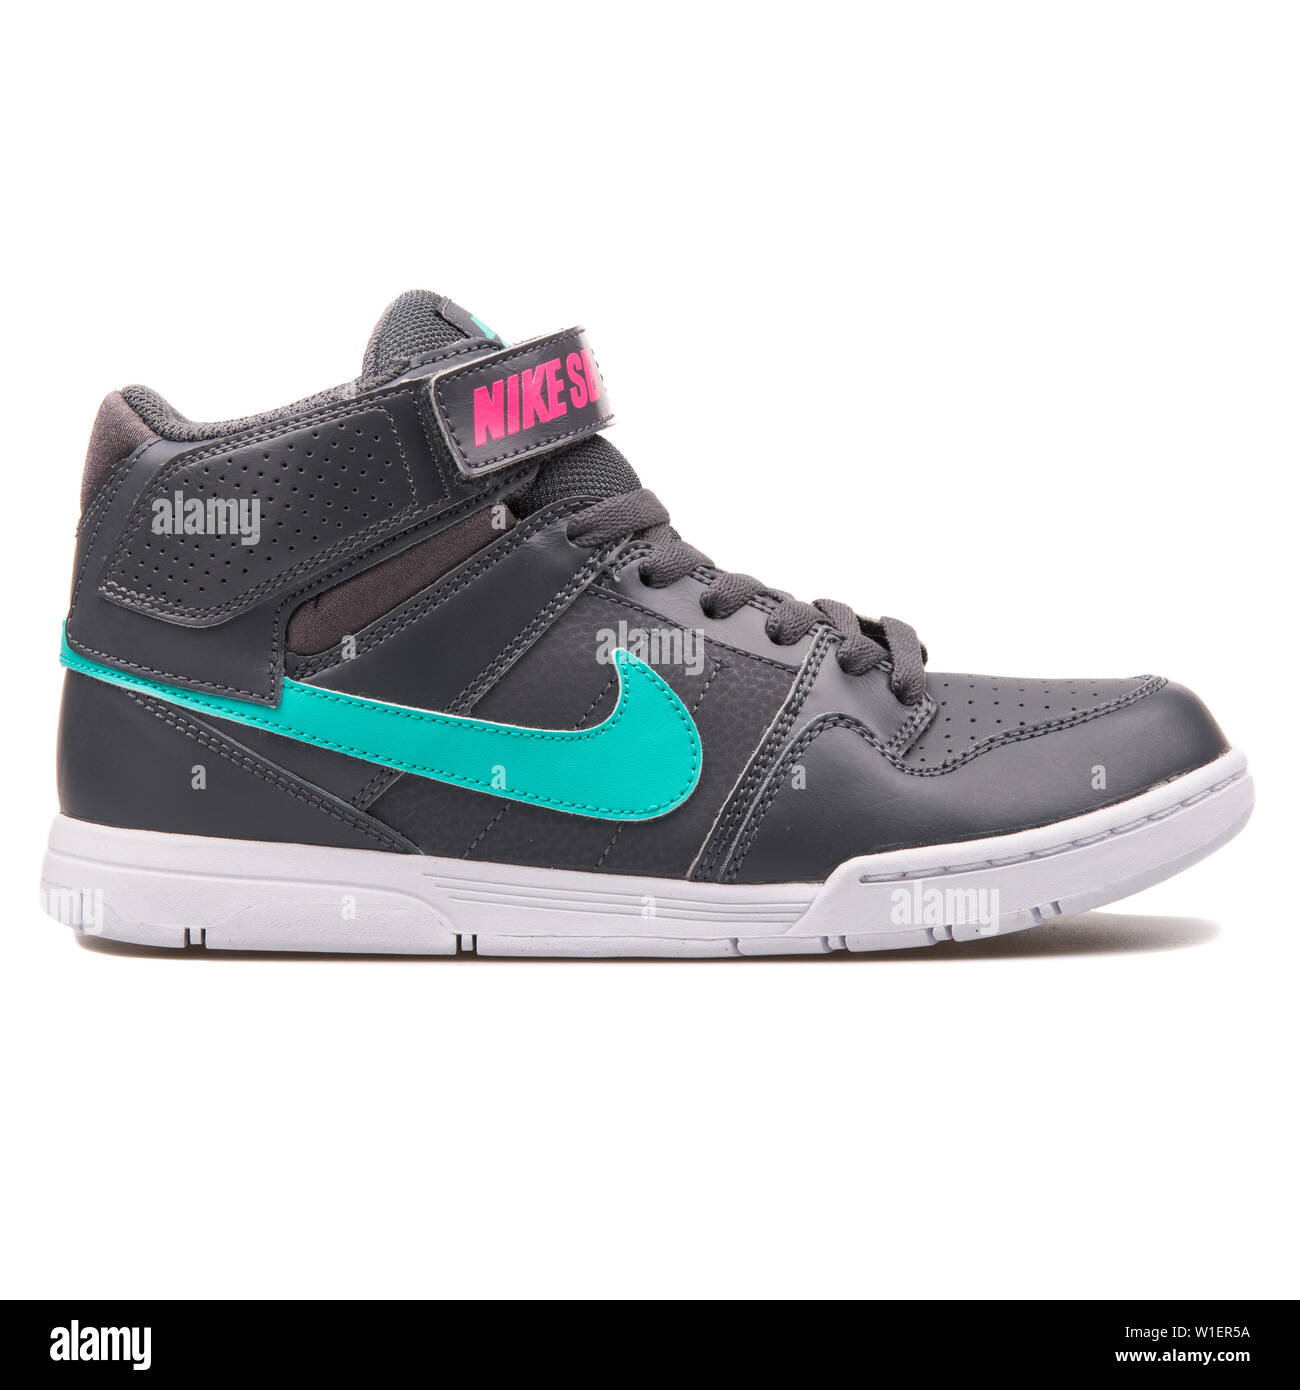 Nike trainers sneakers 2 e de alta resolución - Página 2 - Alamy